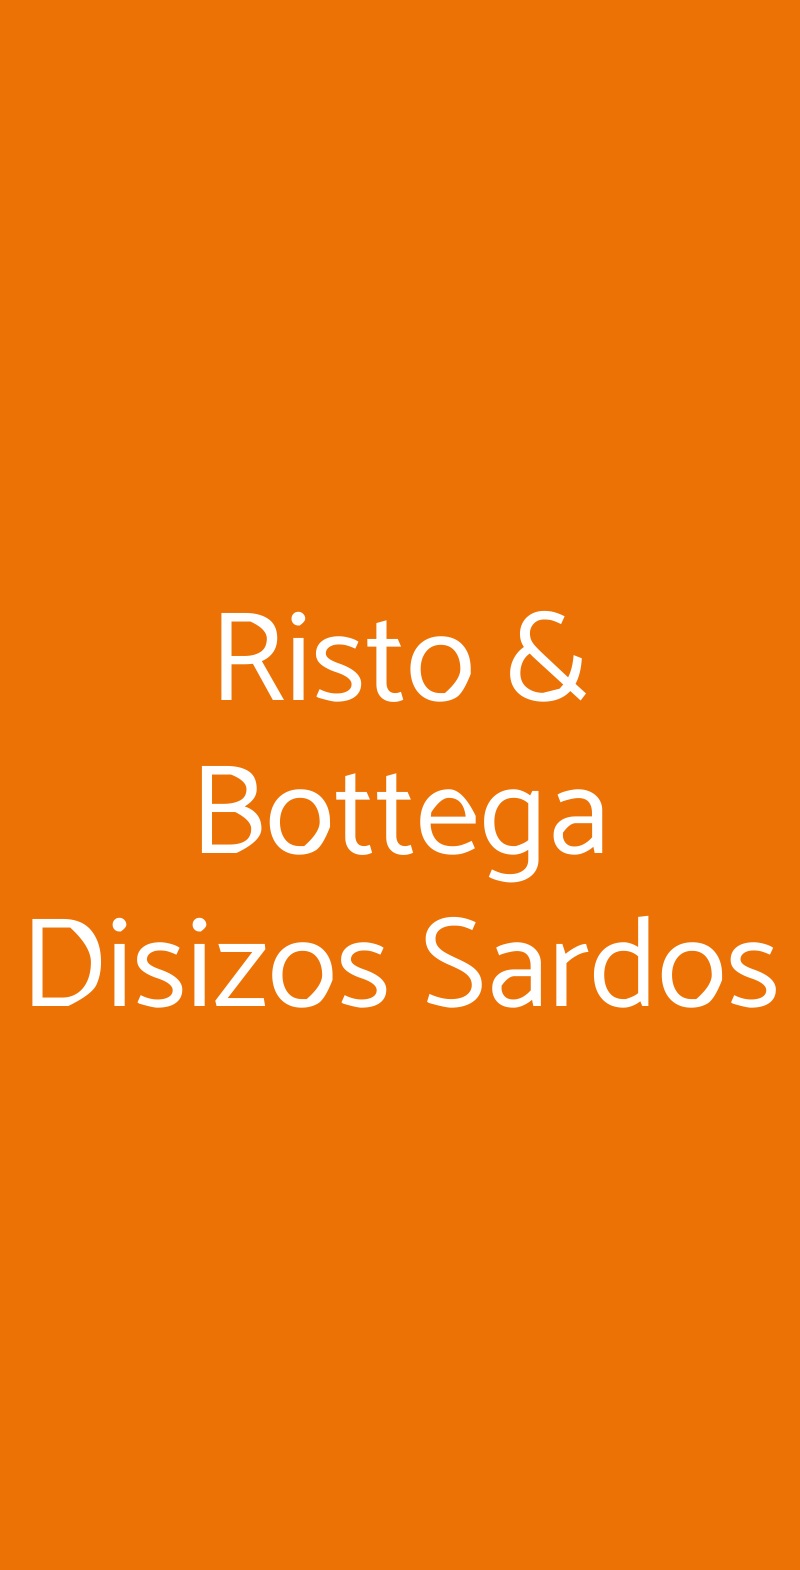 Risto & Bottega Disizos Sardos San Teodoro menù 1 pagina